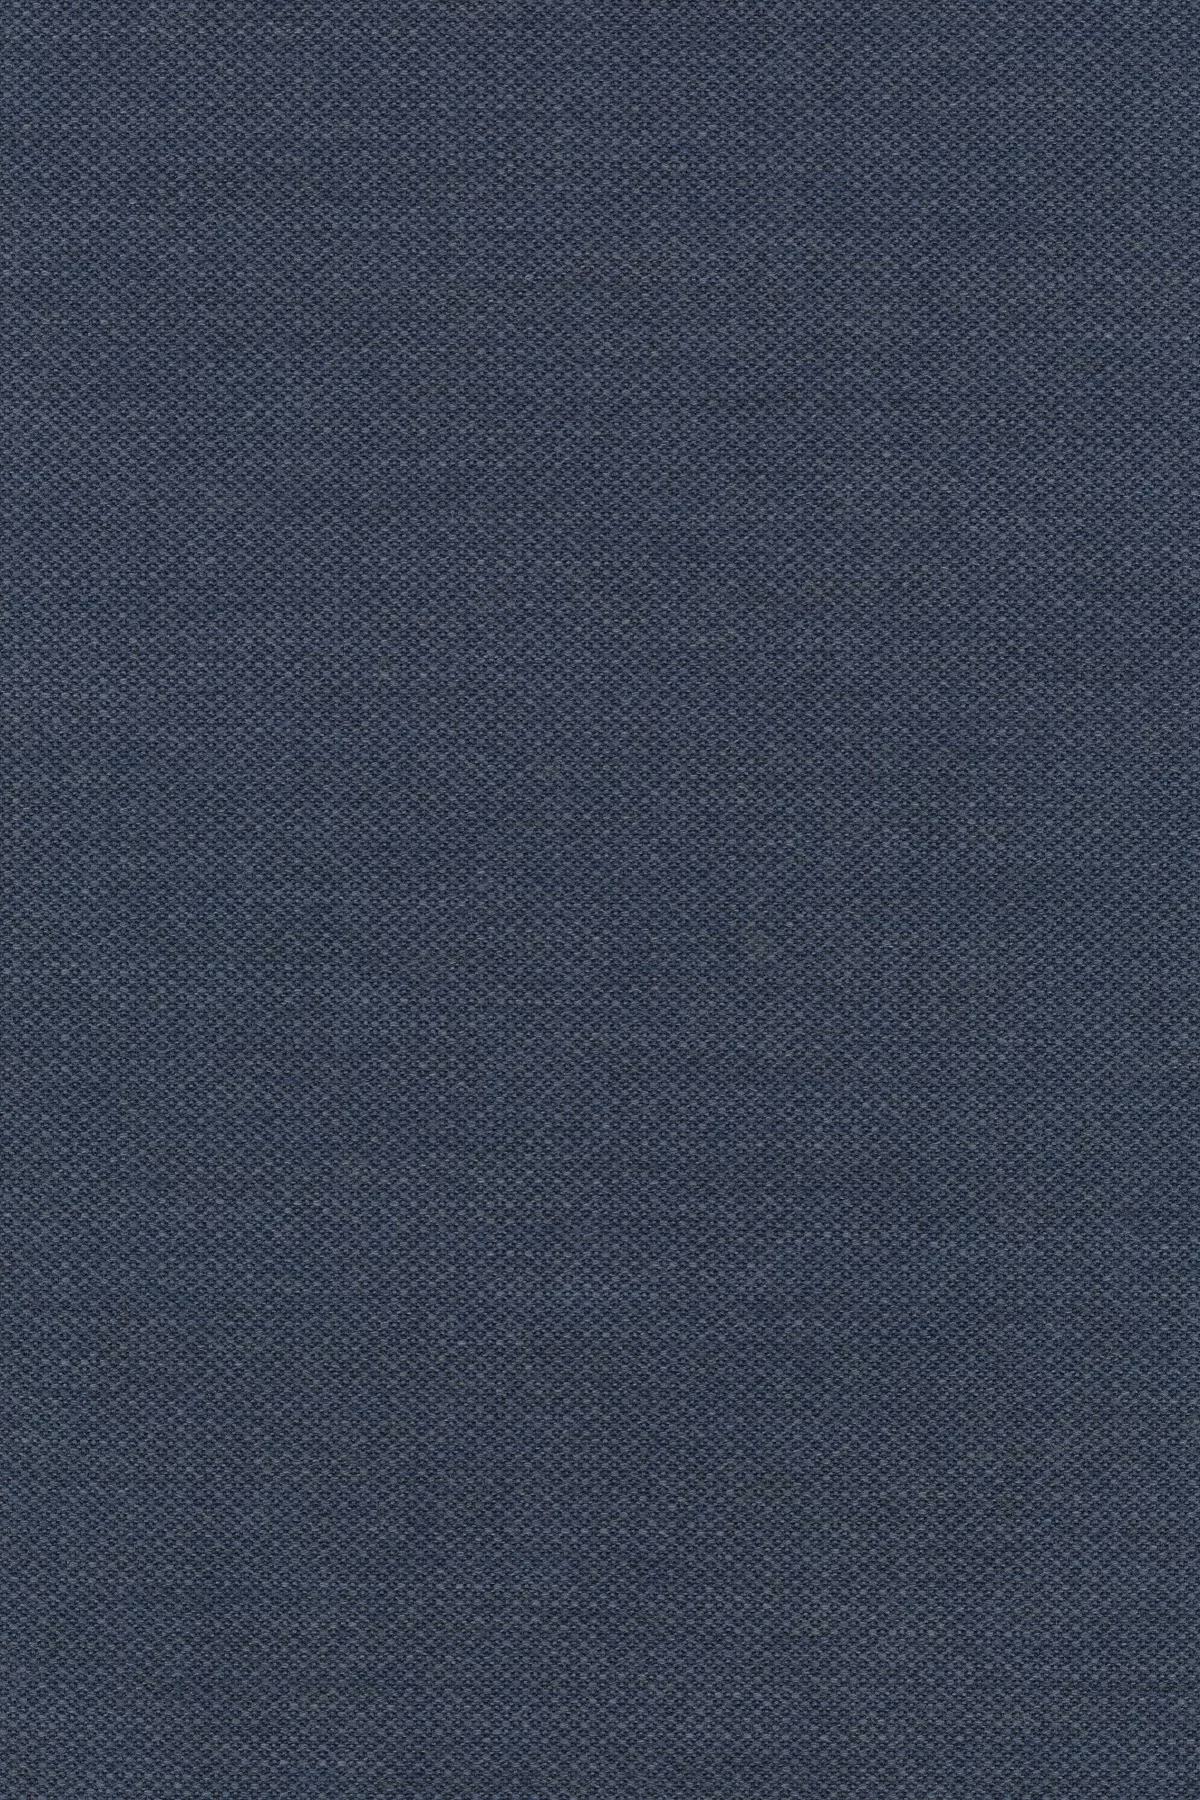 Fabric sample Fiord 771 blue